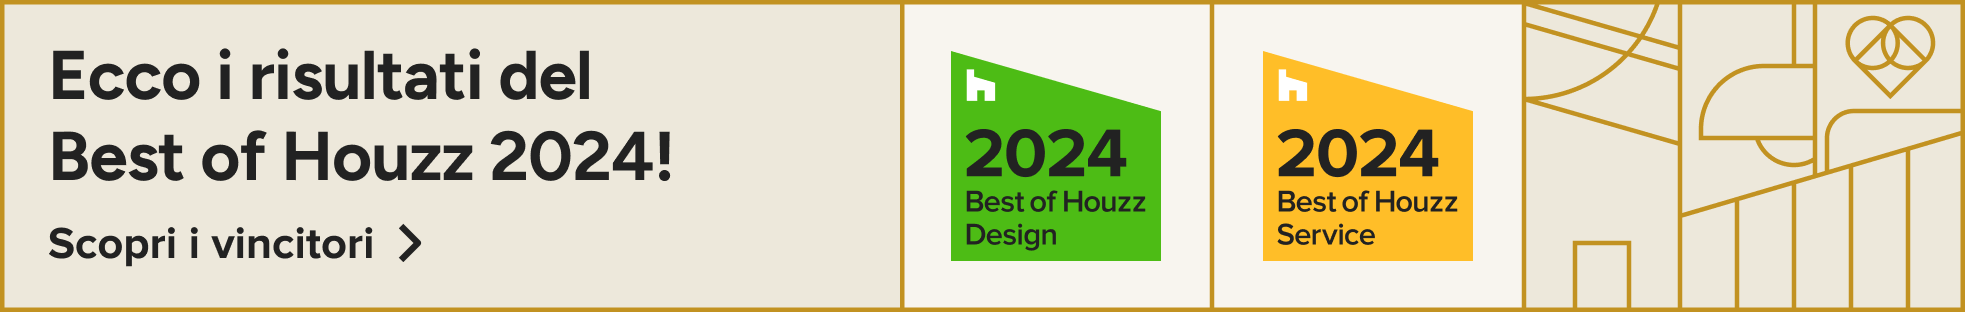 Best of Houzz 2024: ecco i vincitori!